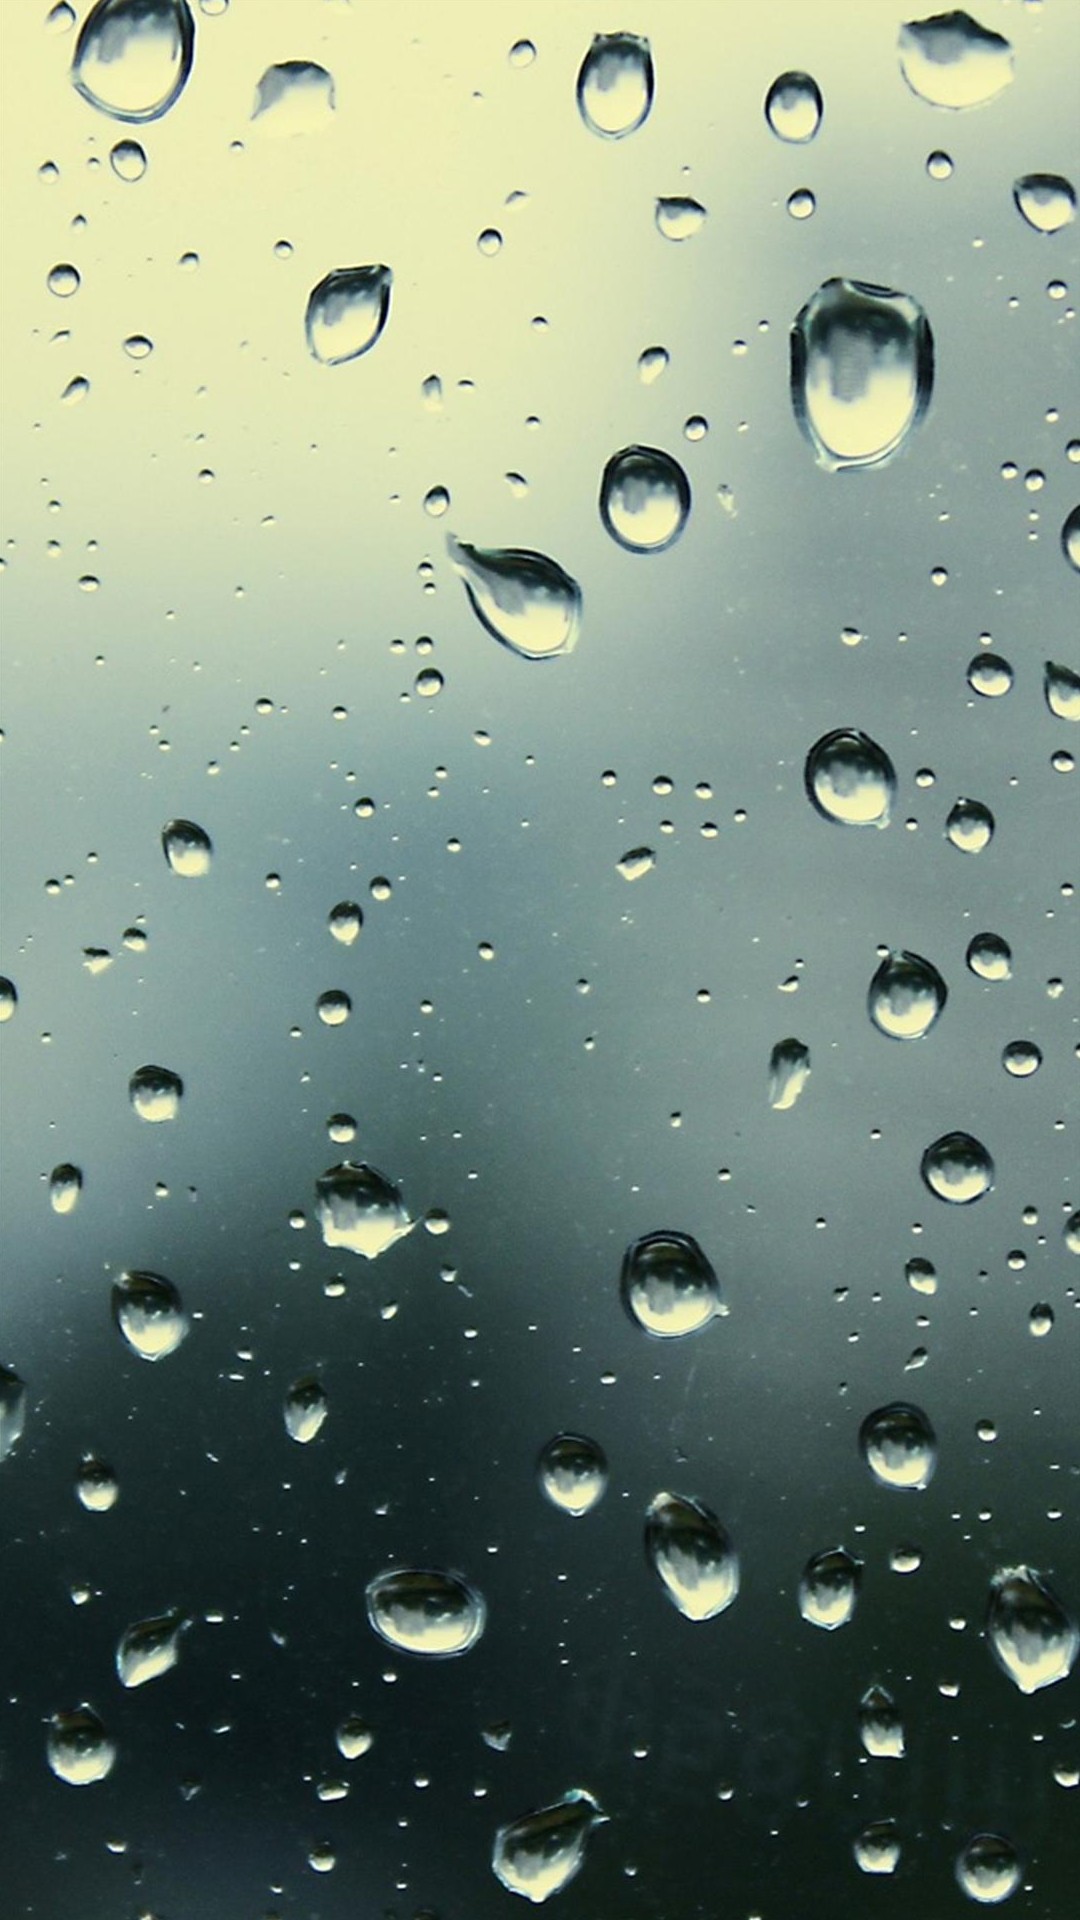 Home Water Drops Galaxy S4 Wallpaper HD